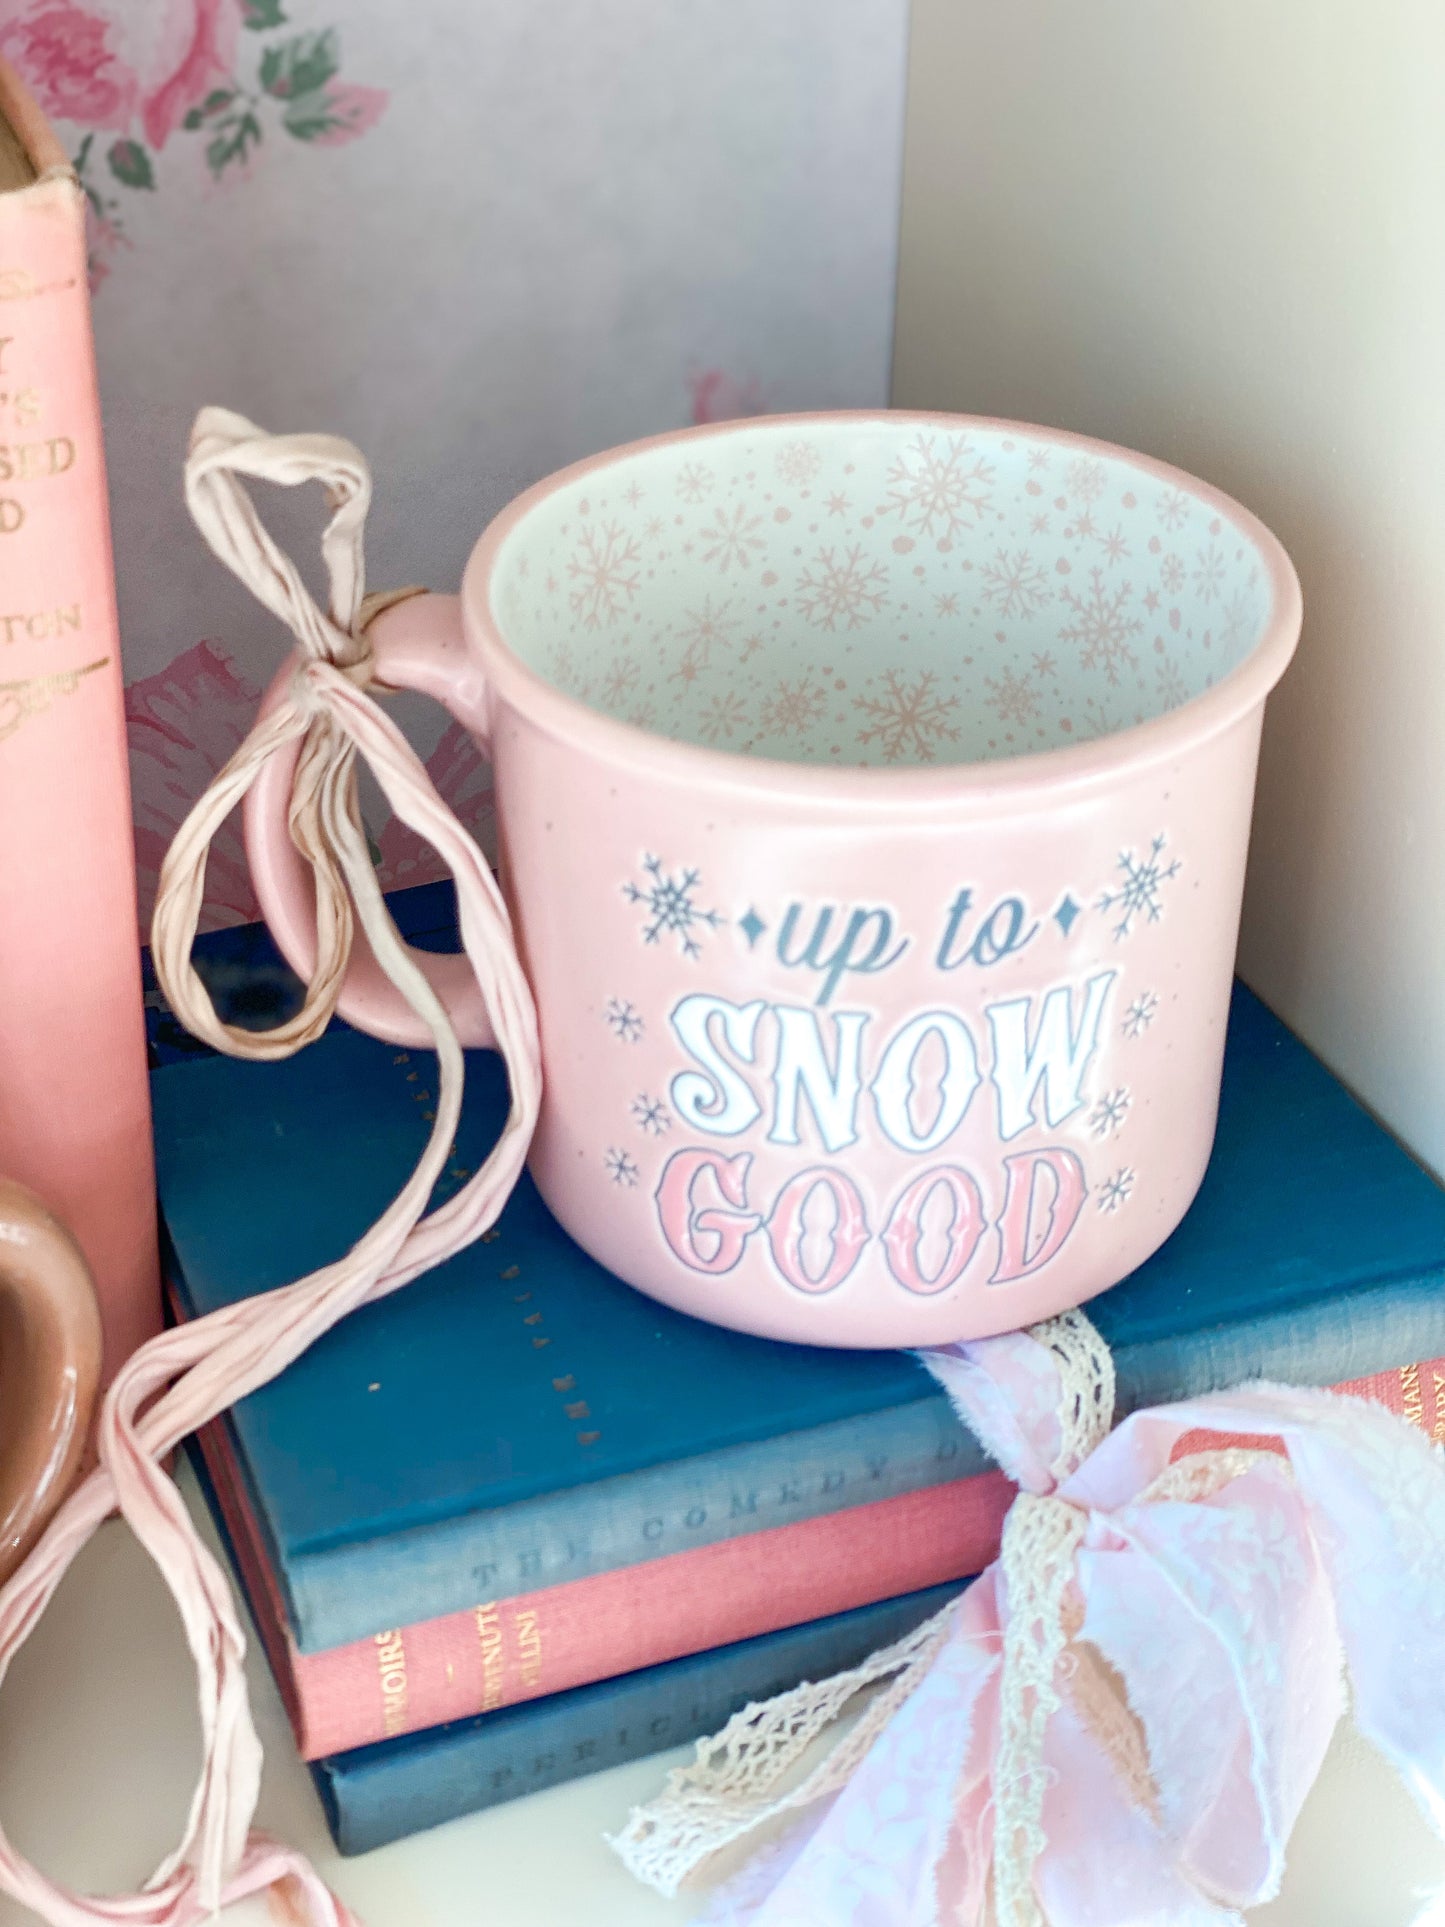 Pink “Up to Snow Good” mug with pink snowflake interior